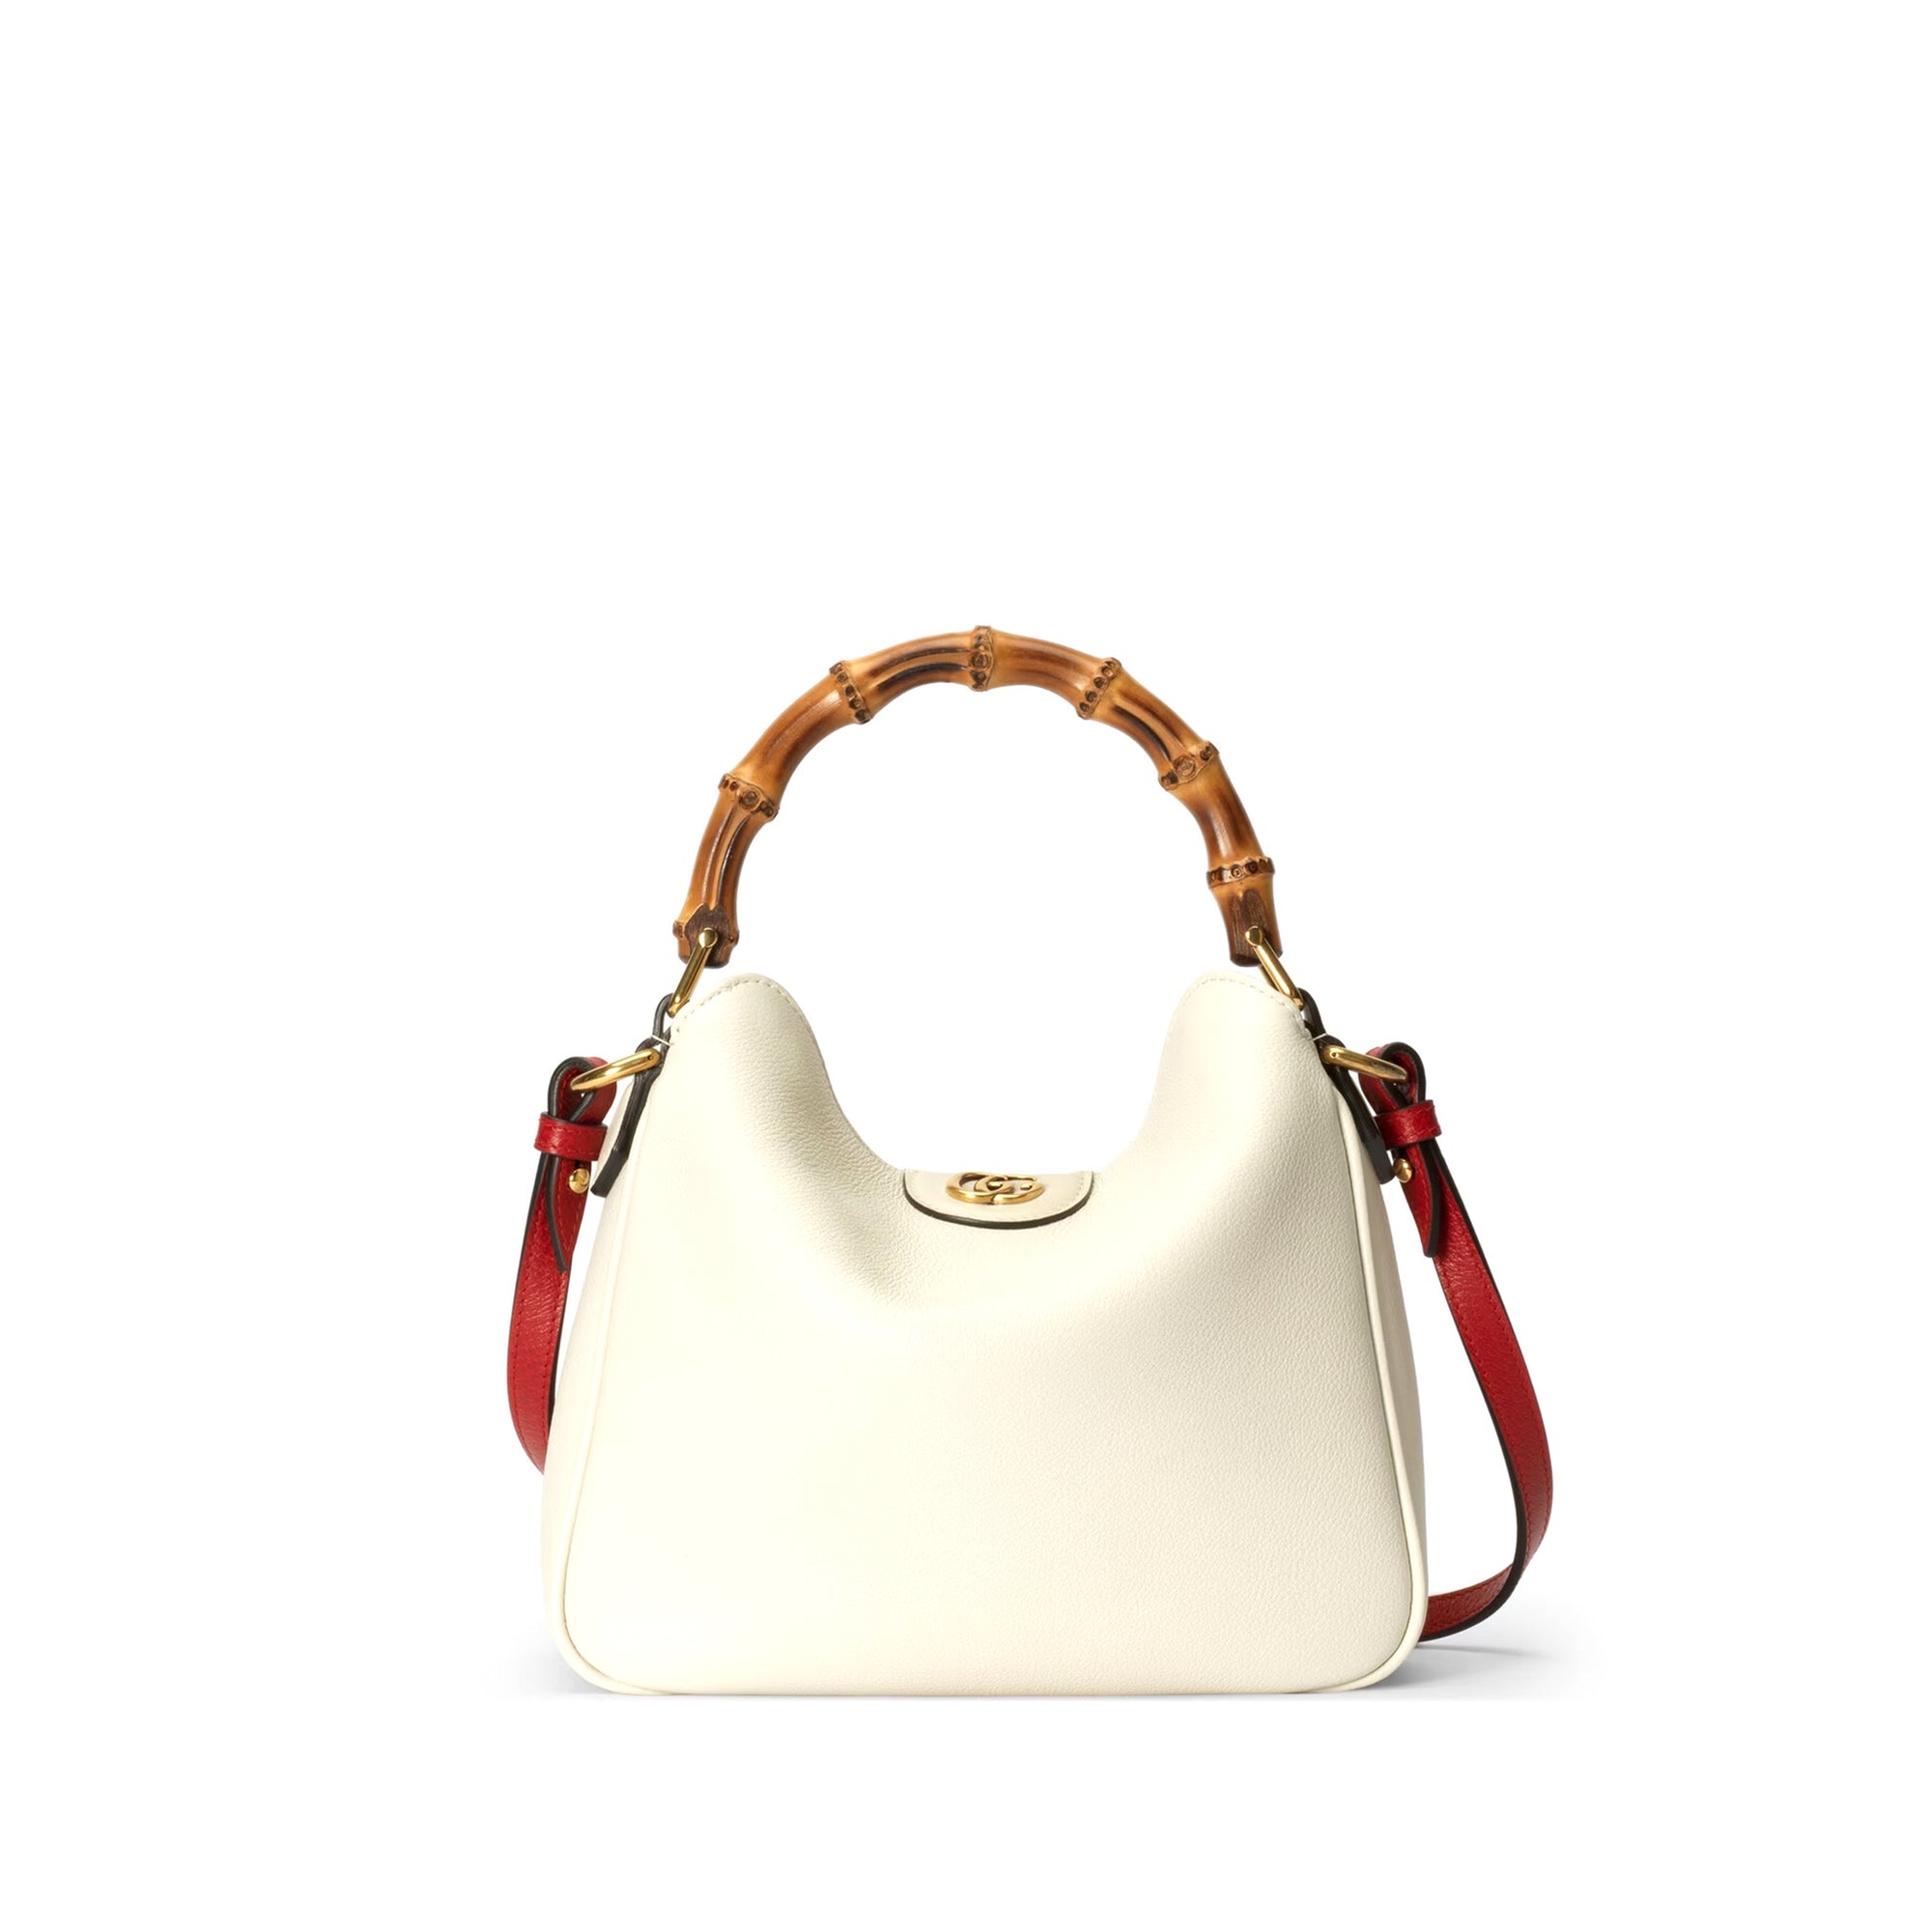 Gucci - Women’s Diana Small Shoulder Bag - (White) view 1